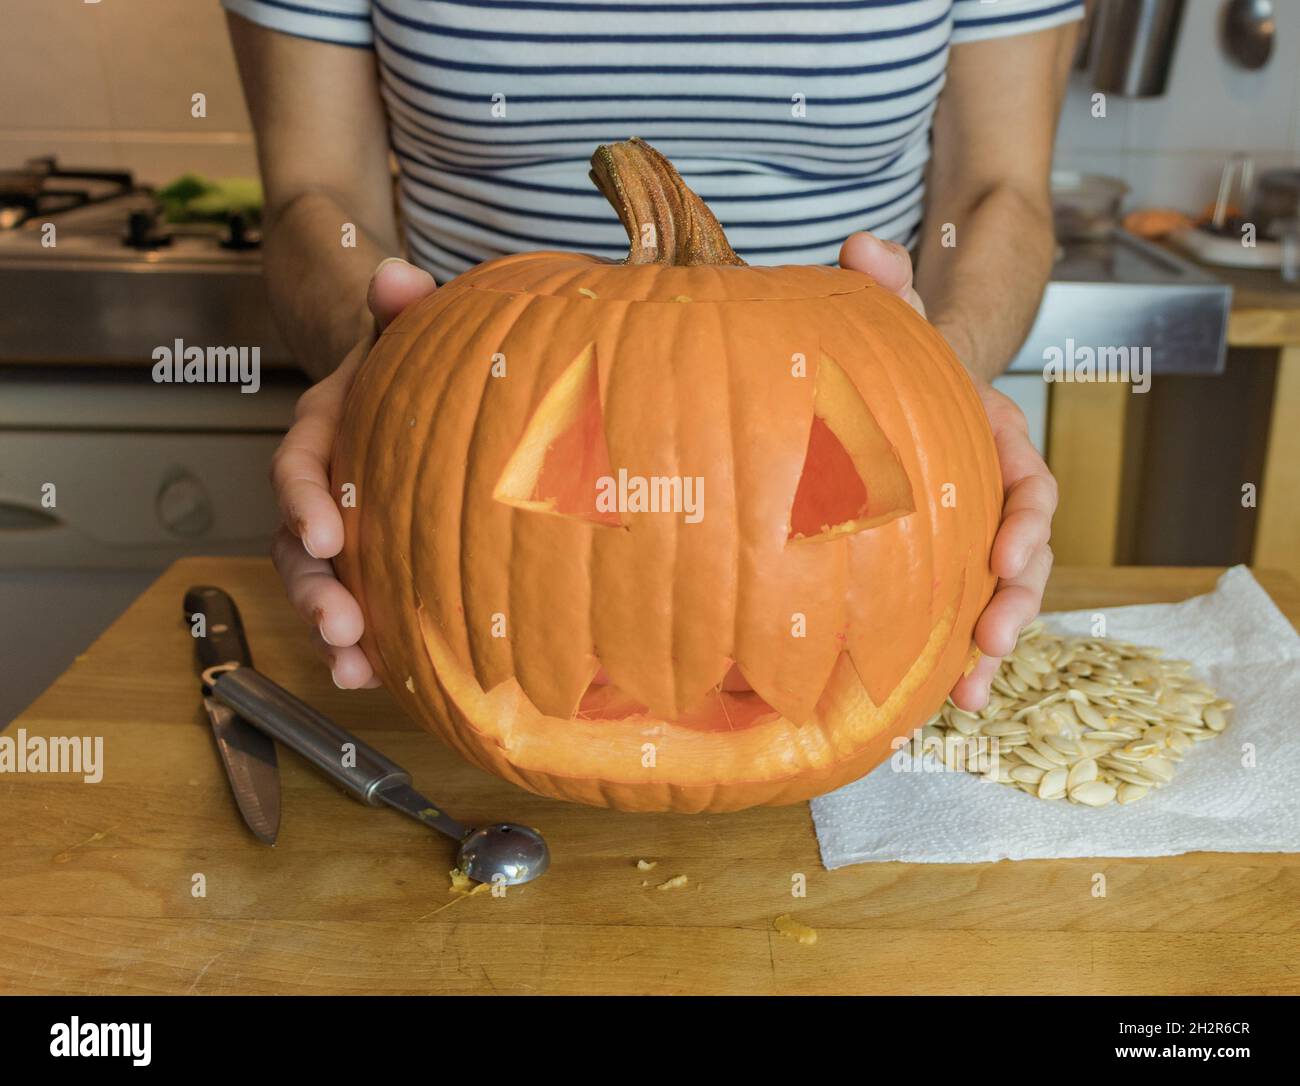 Pumpkin decorated and prepared for Halloween, human hands displaying pumpkin Stock Photo